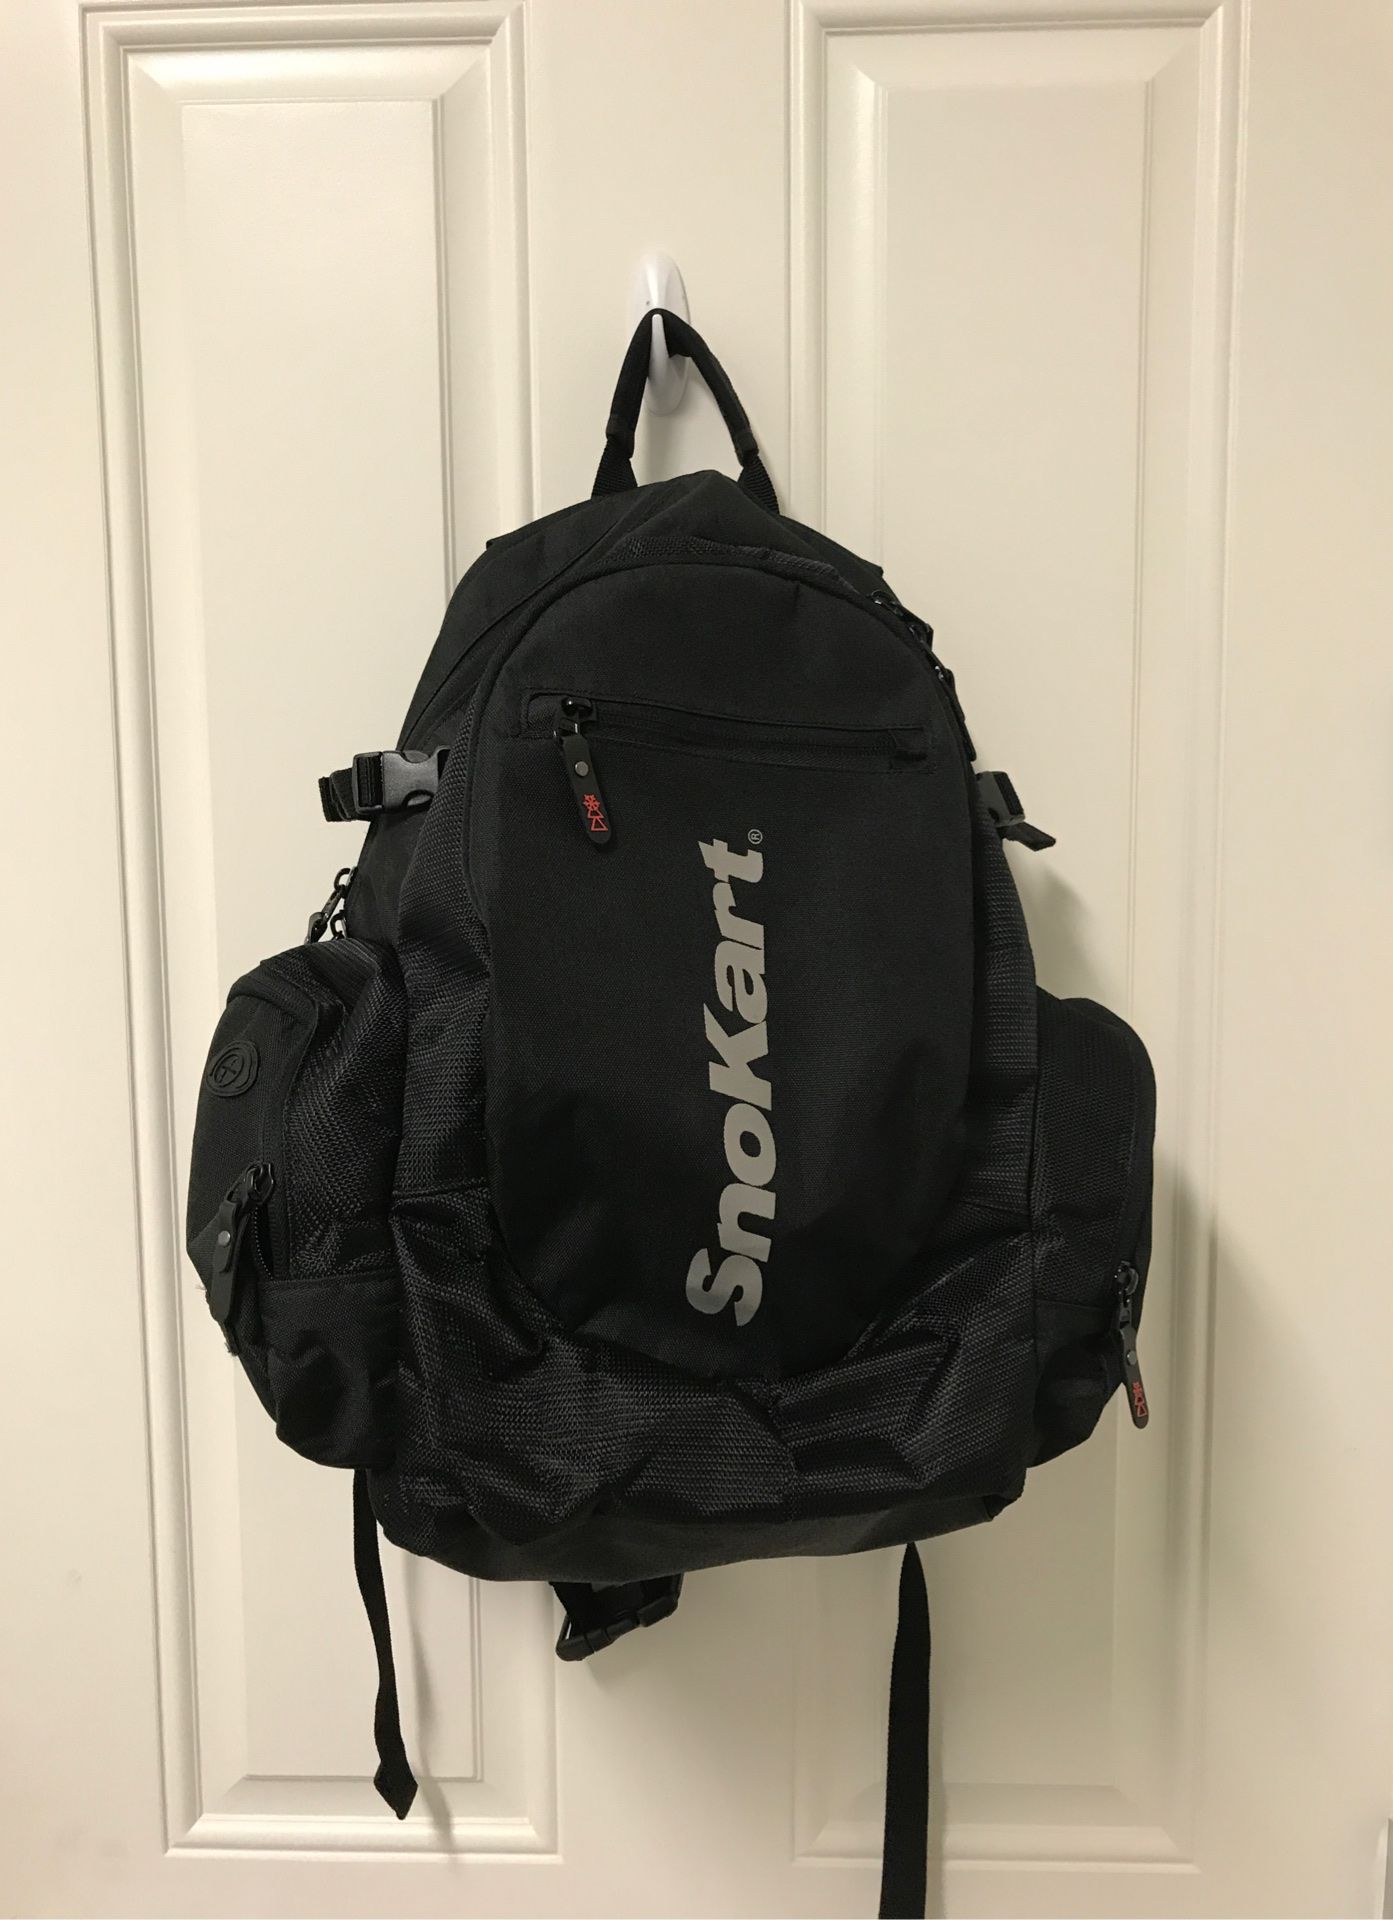 Snokart Backpack